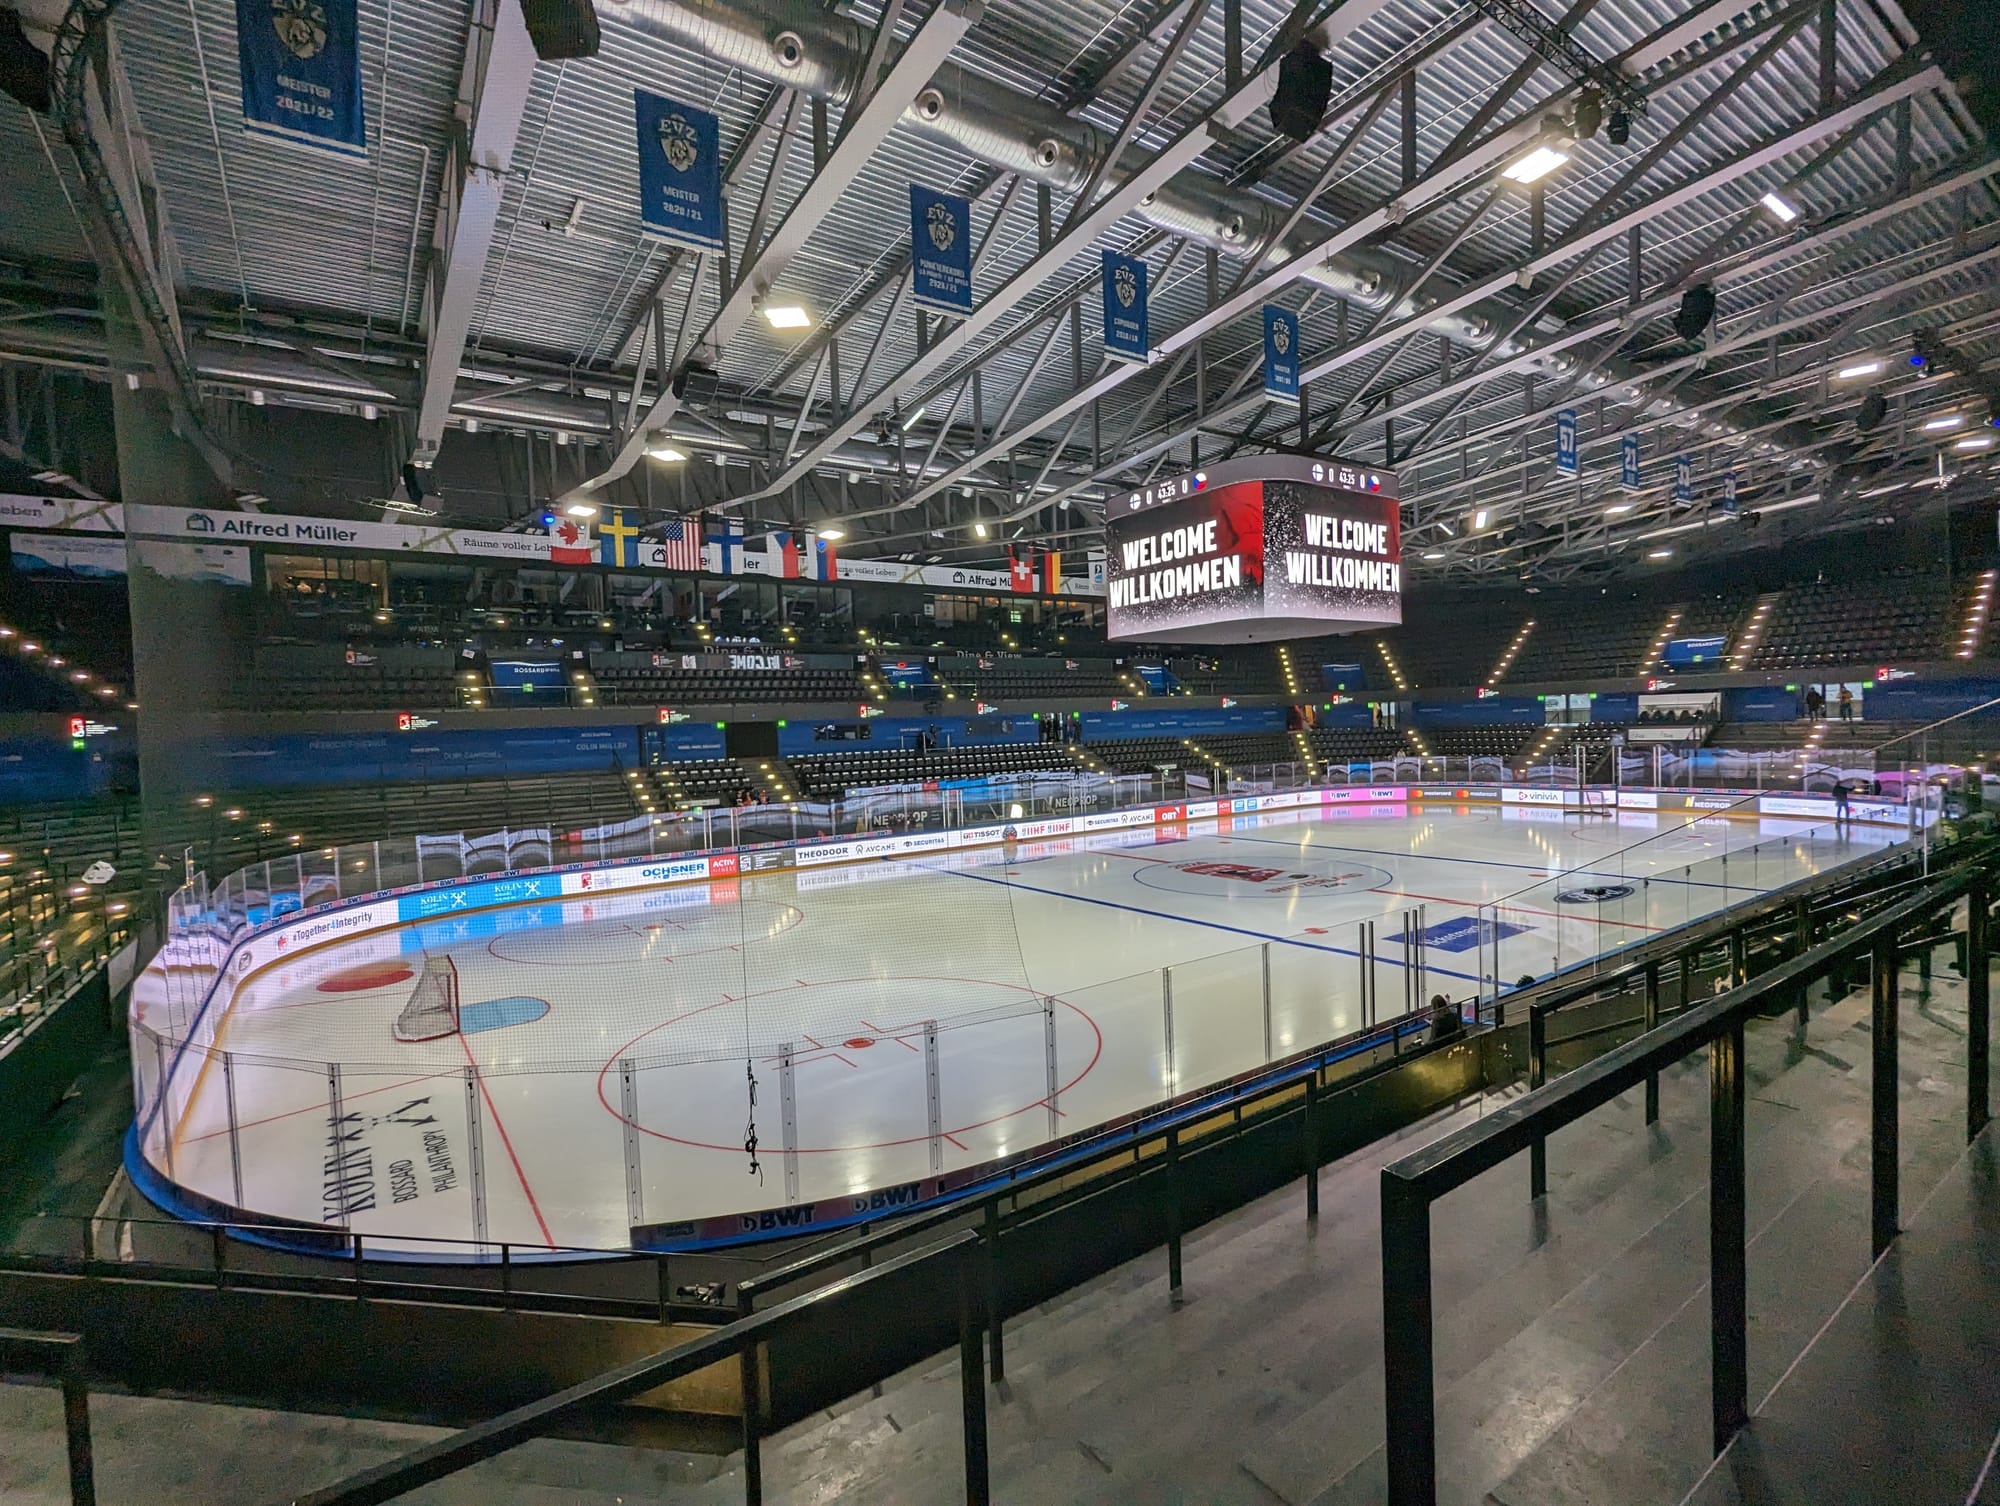 January 7 - IIHF U18 Women's World Championship: Postgame Videos